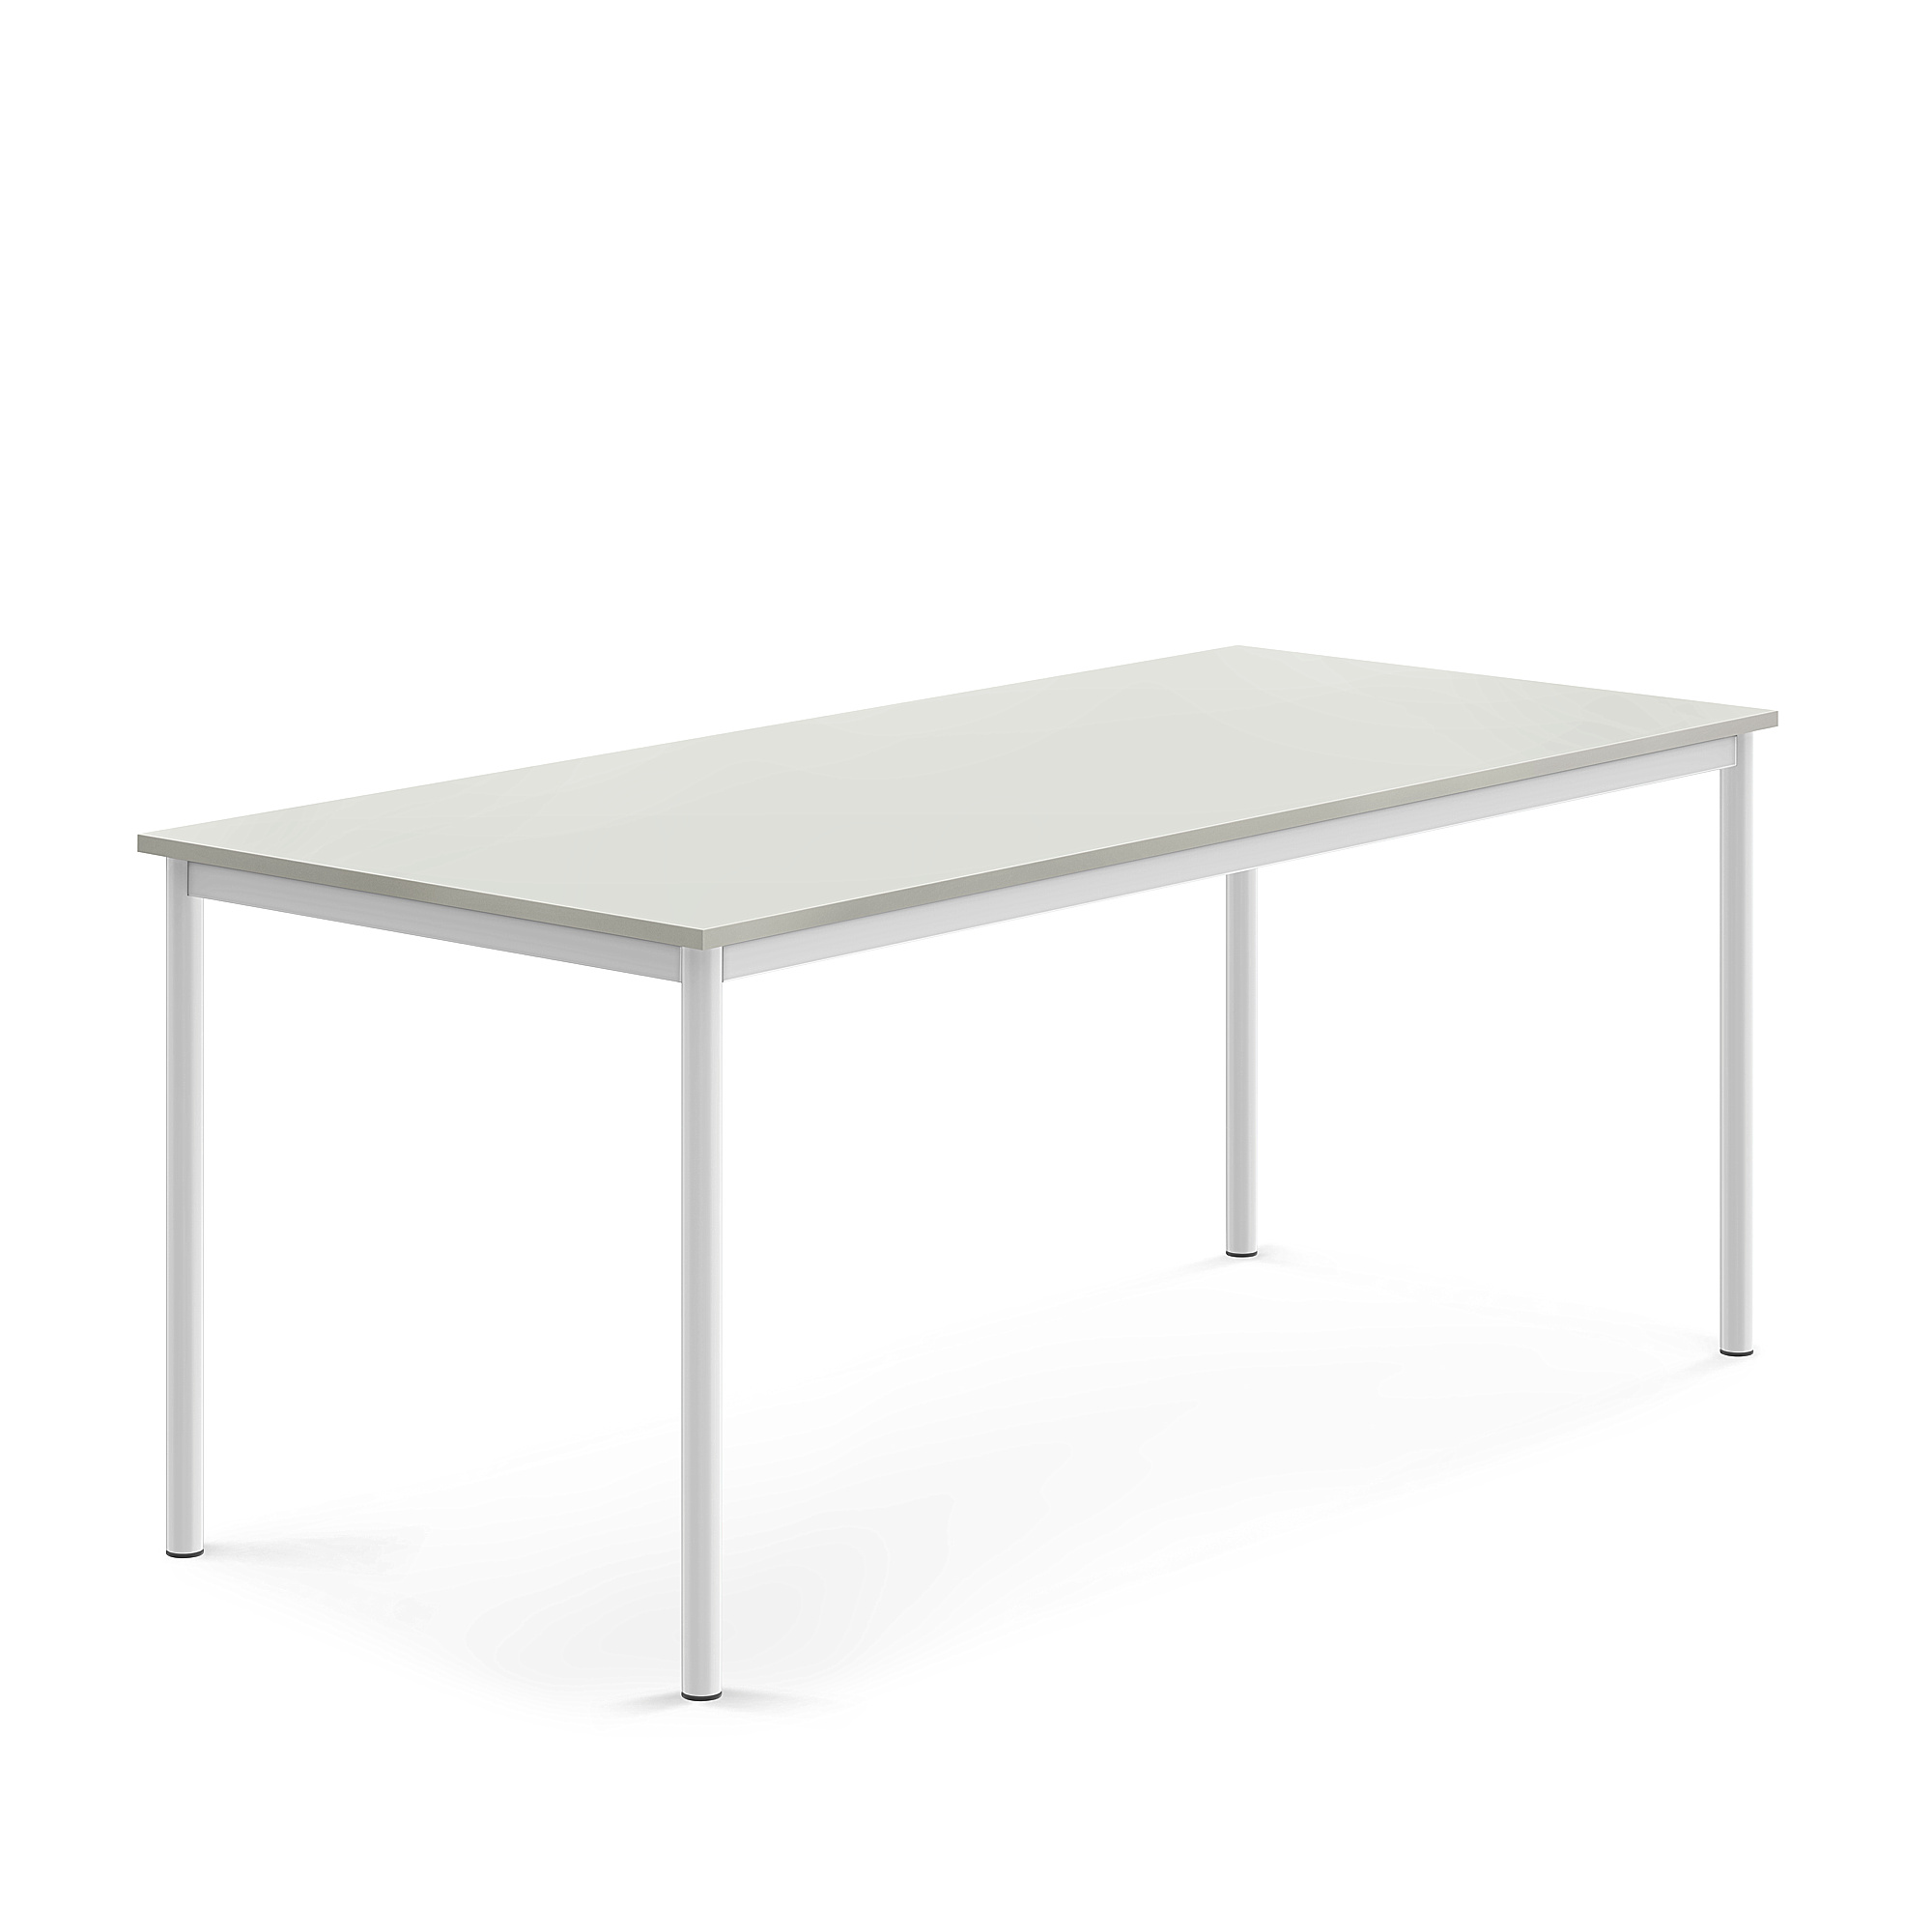 Stůl SONITUS, 1800x800x720 mm, bílé nohy, HPL deska tlumící hluk, šedá